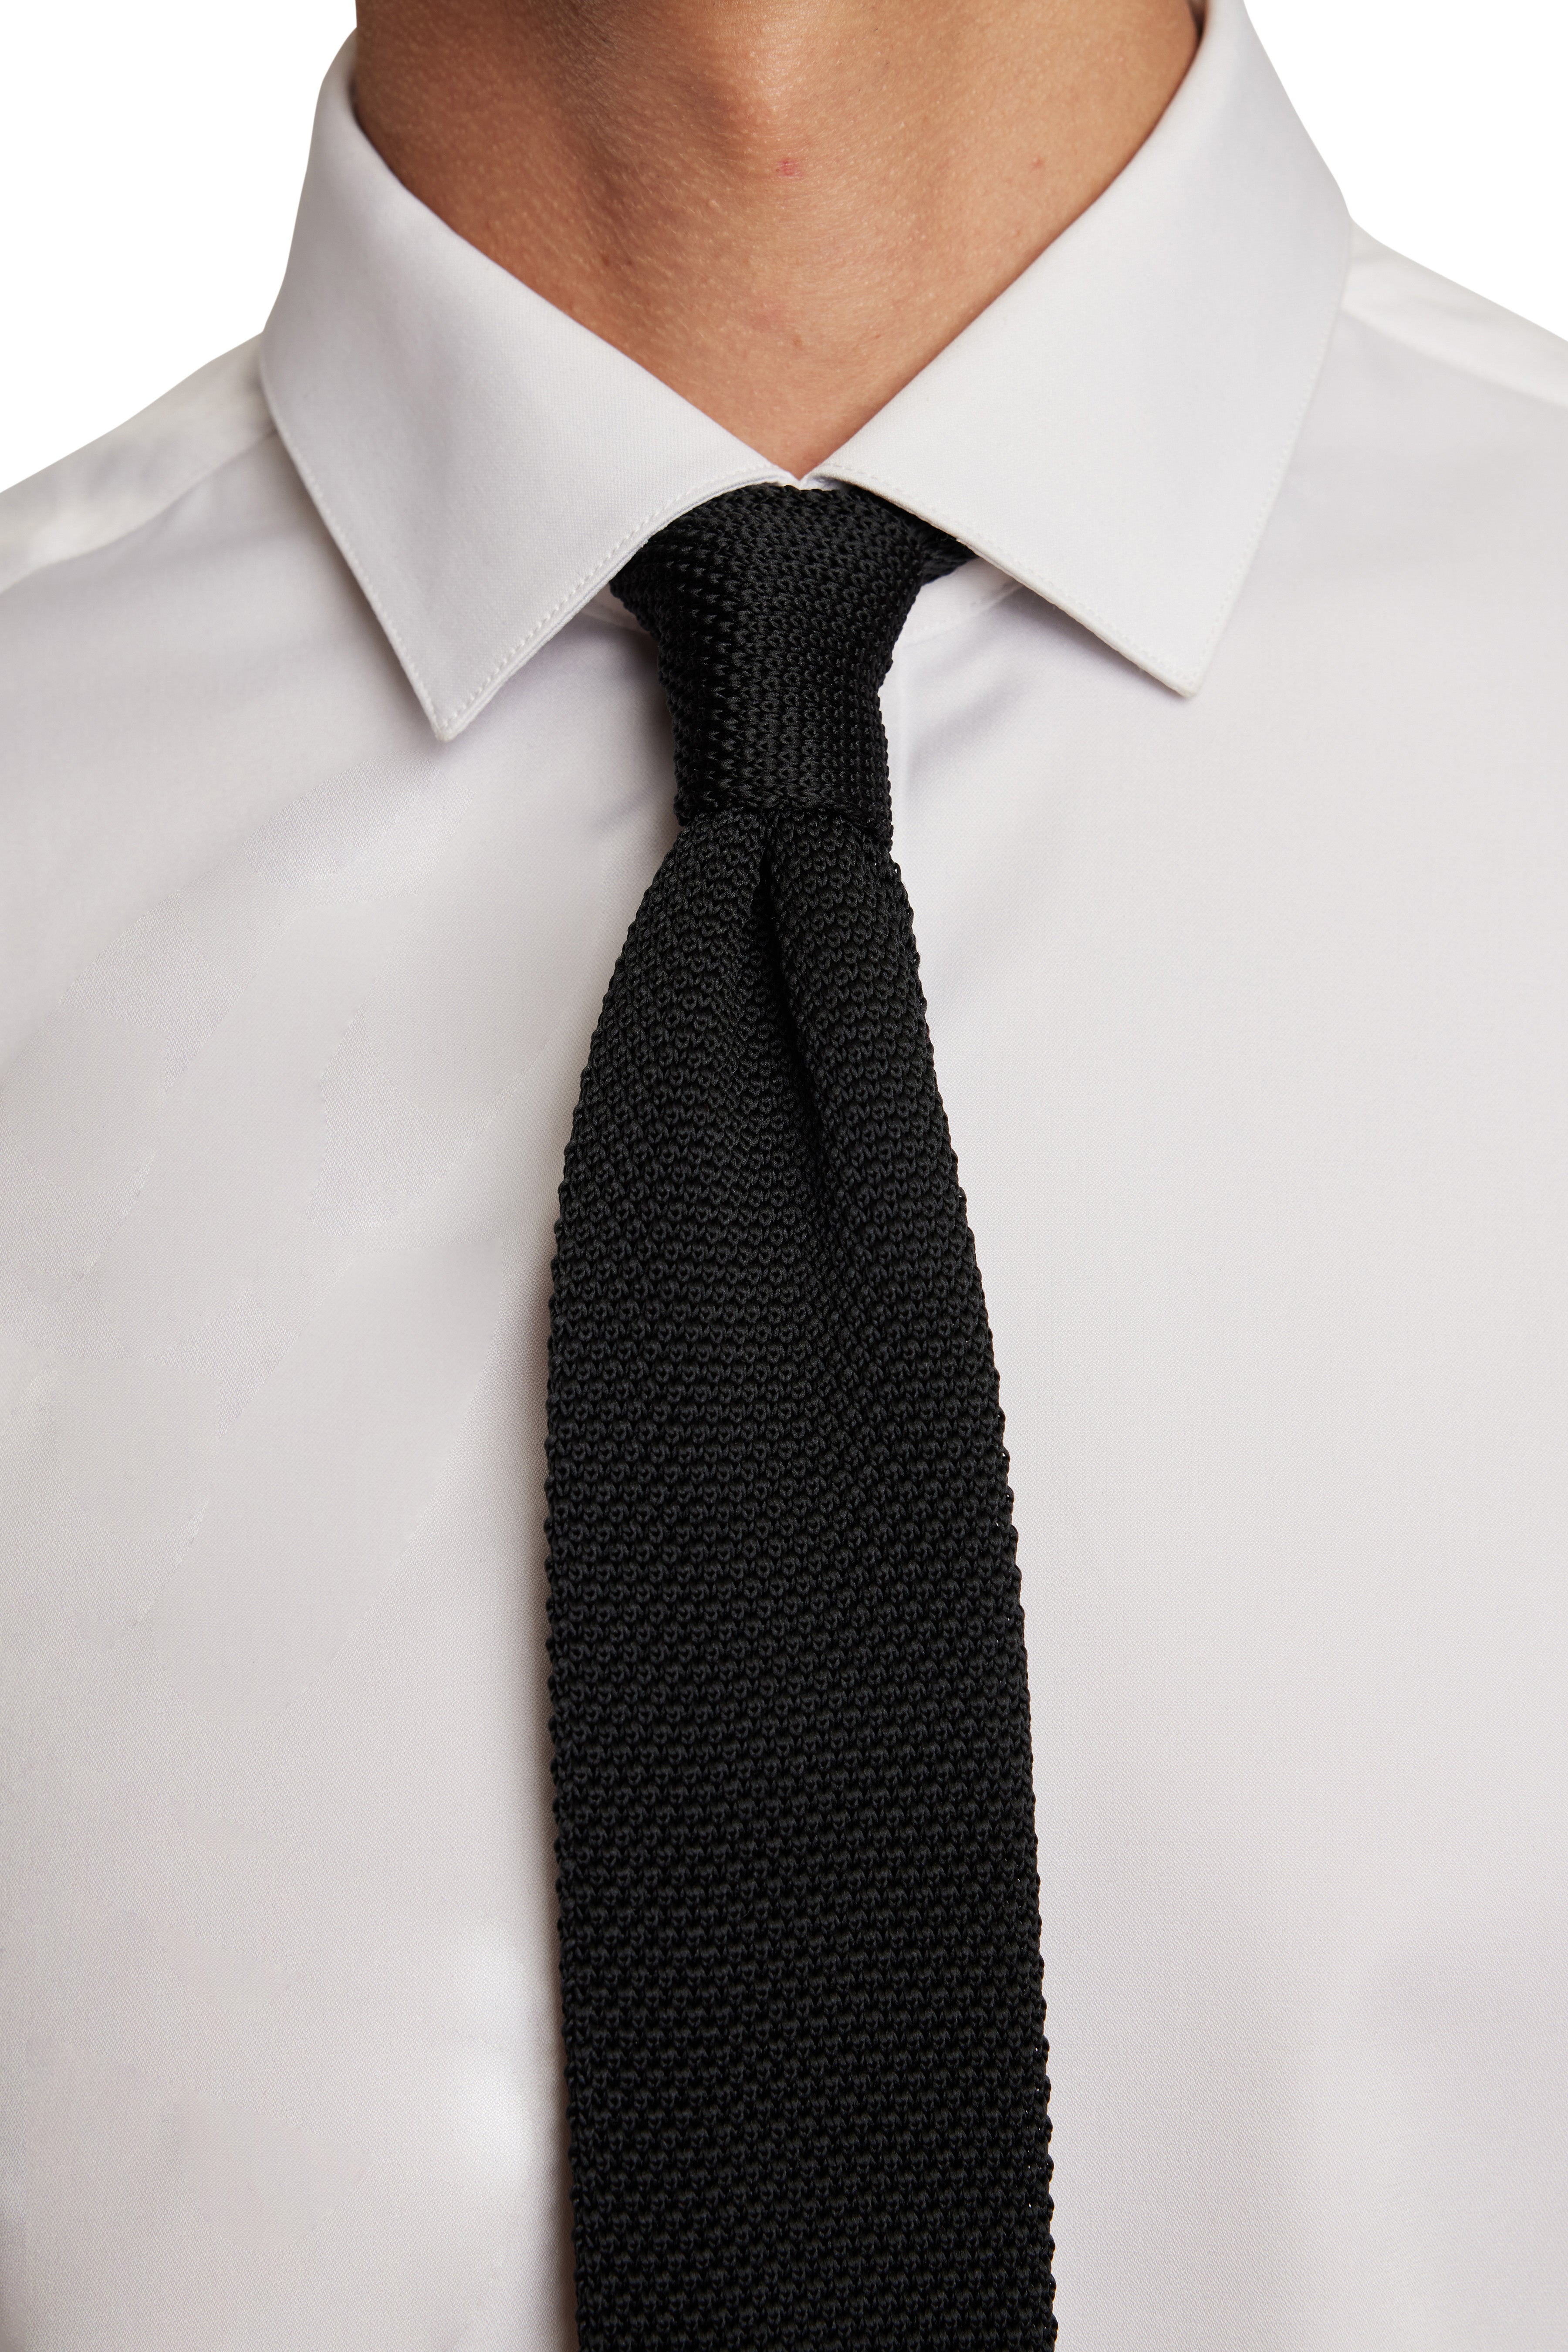 Stanley Knit Tie - Coal Black